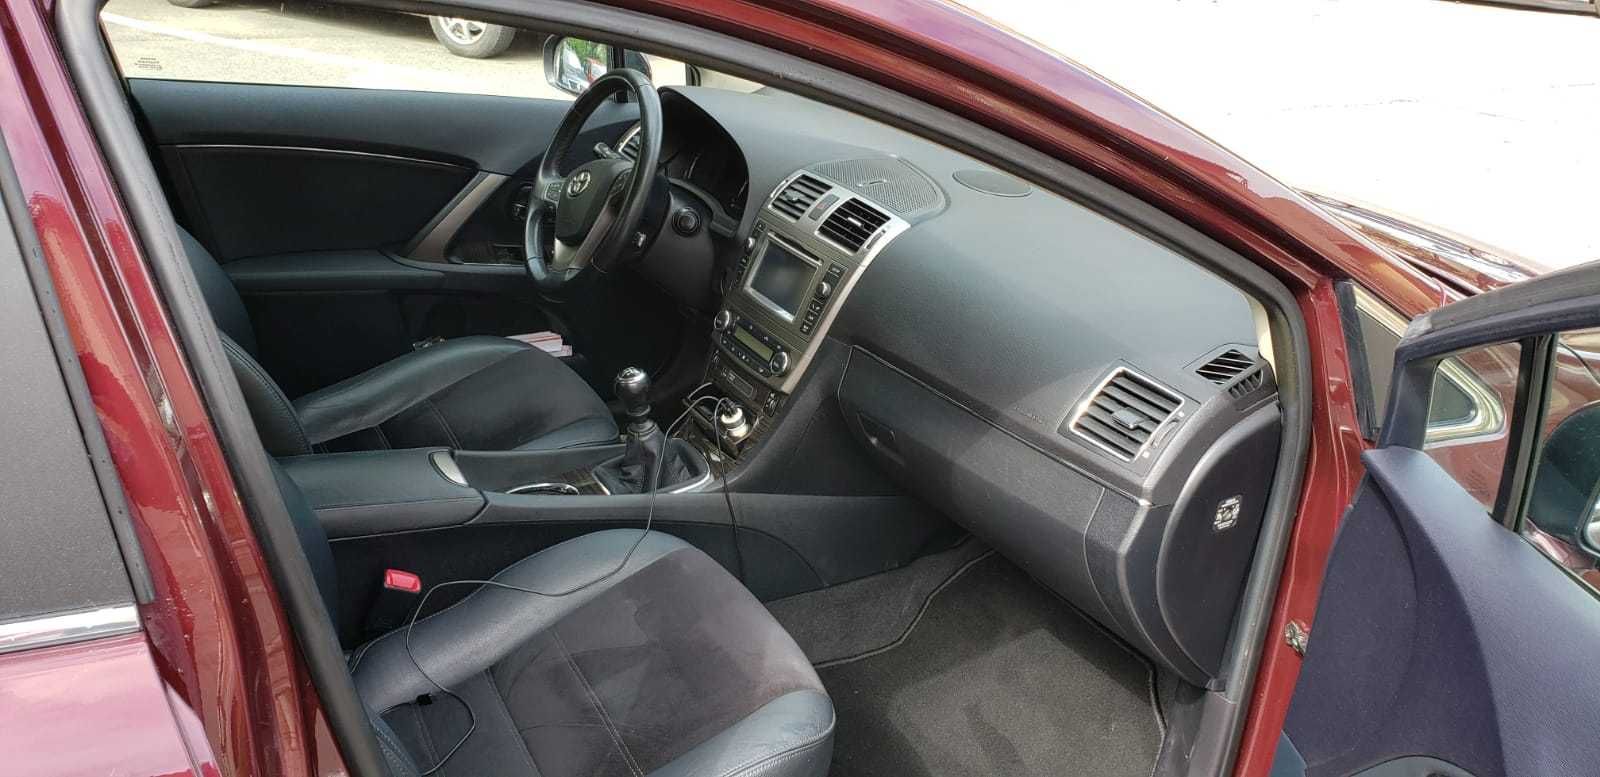 Toyota Avensis, 245700 km, 2013, motor 2.2